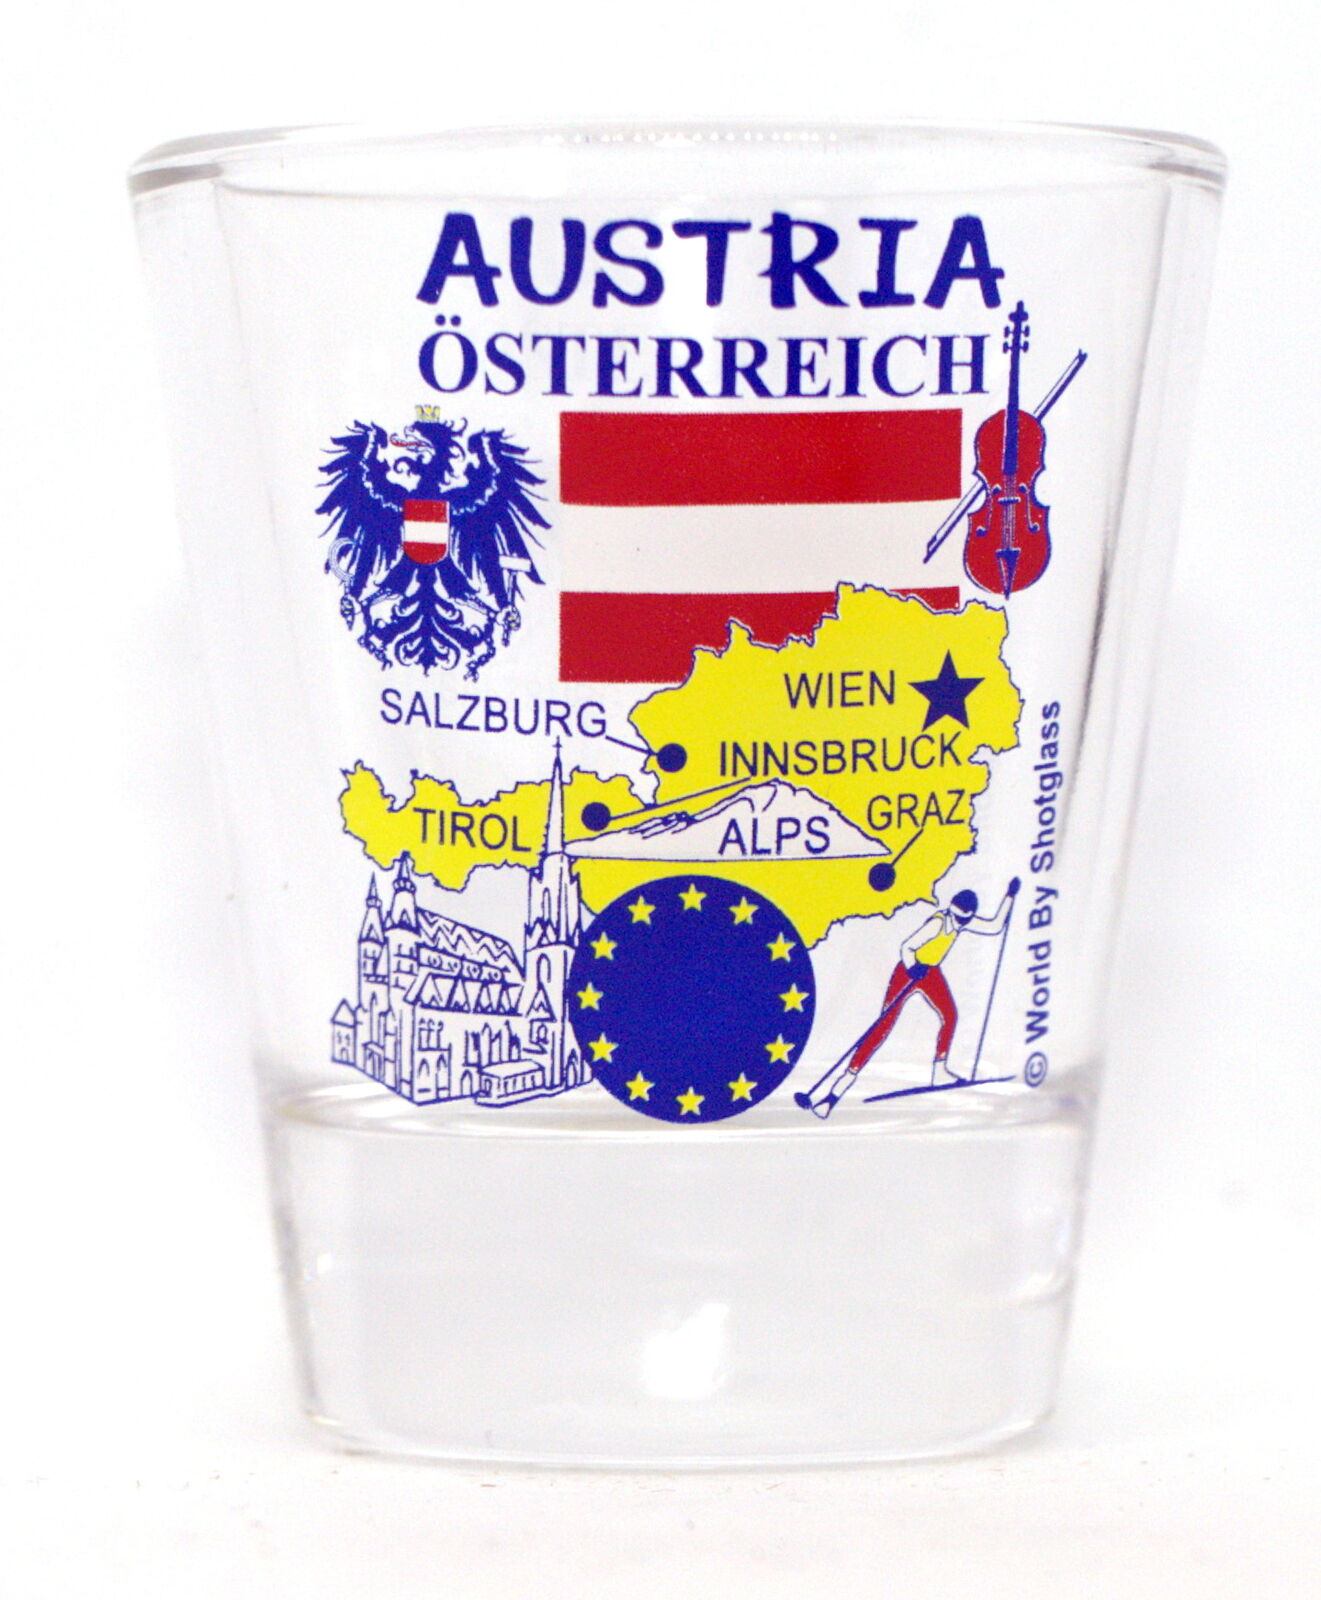 AUSTRIA EU SERIES LANDMARKS AND ICONS COLLAGE SHOT GLASS SHOTGLASS